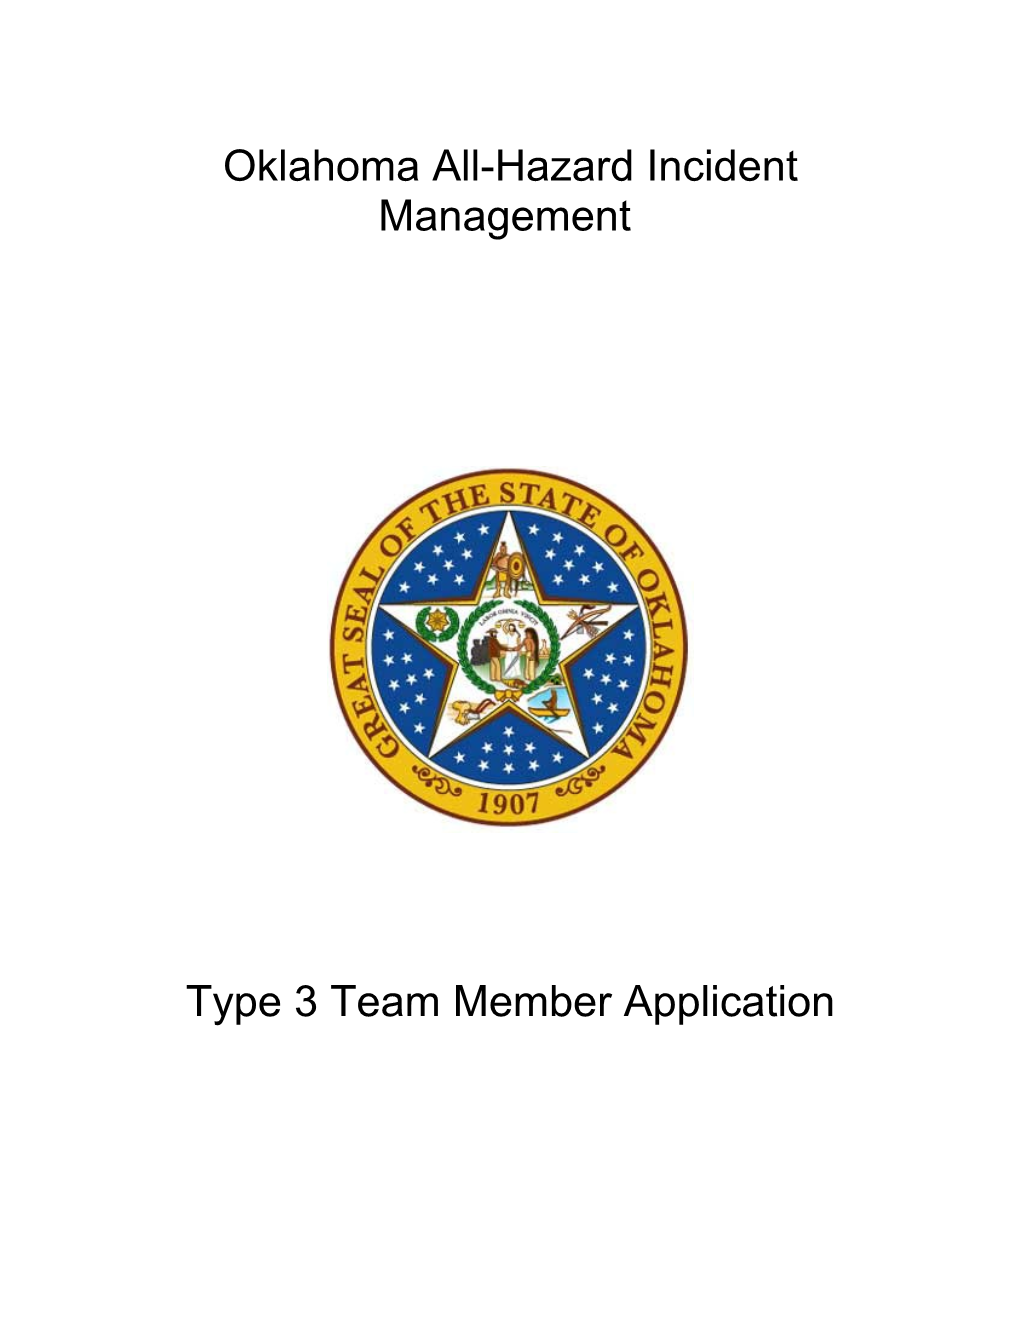 Oklahoma All-Hazard Incident Management Type 3 Team Member Application s1